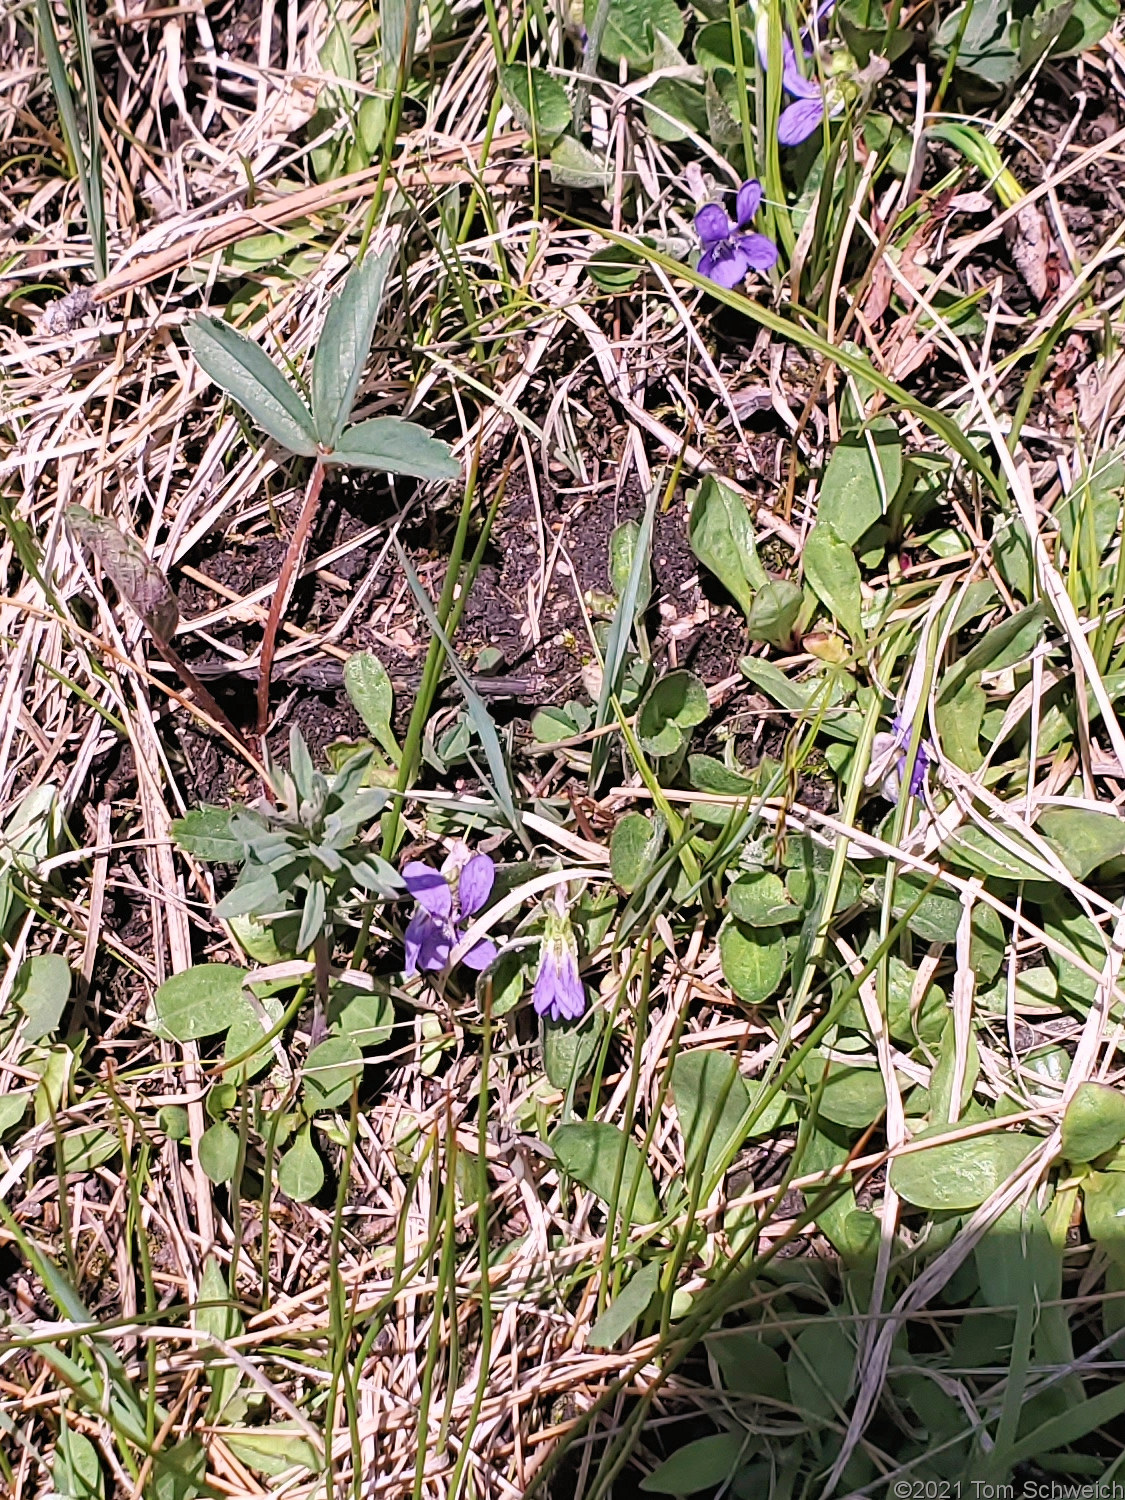 Violaceae Viola adunca